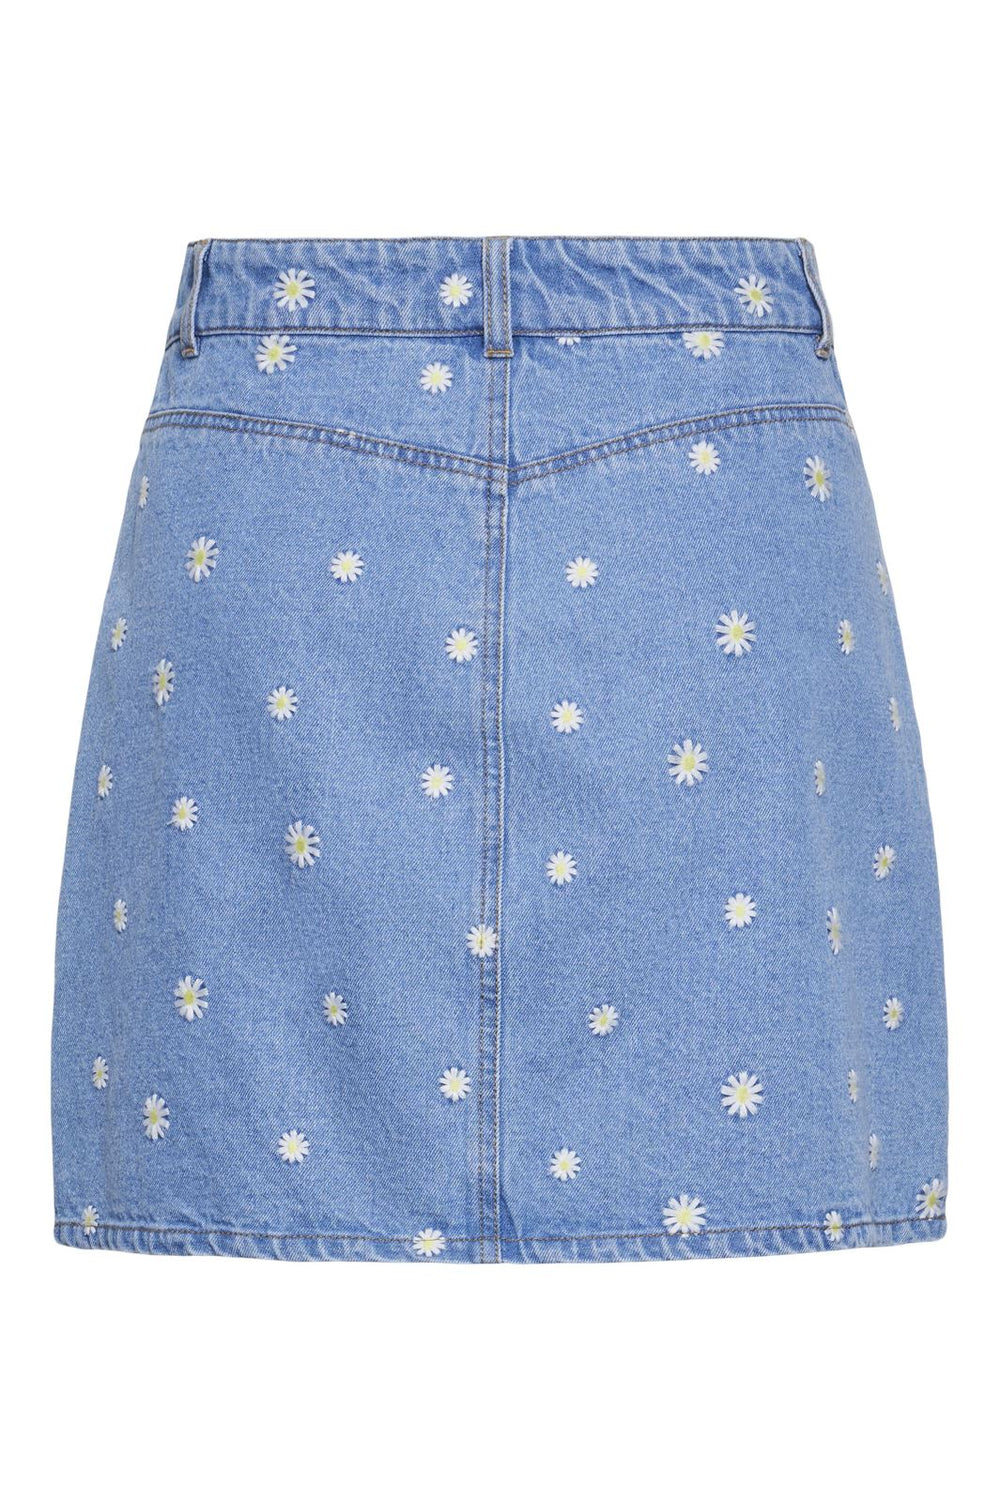 Pieces - Pcmay Short Denim Skirt - 4574938 Medium Blue Denim Emb Flowers